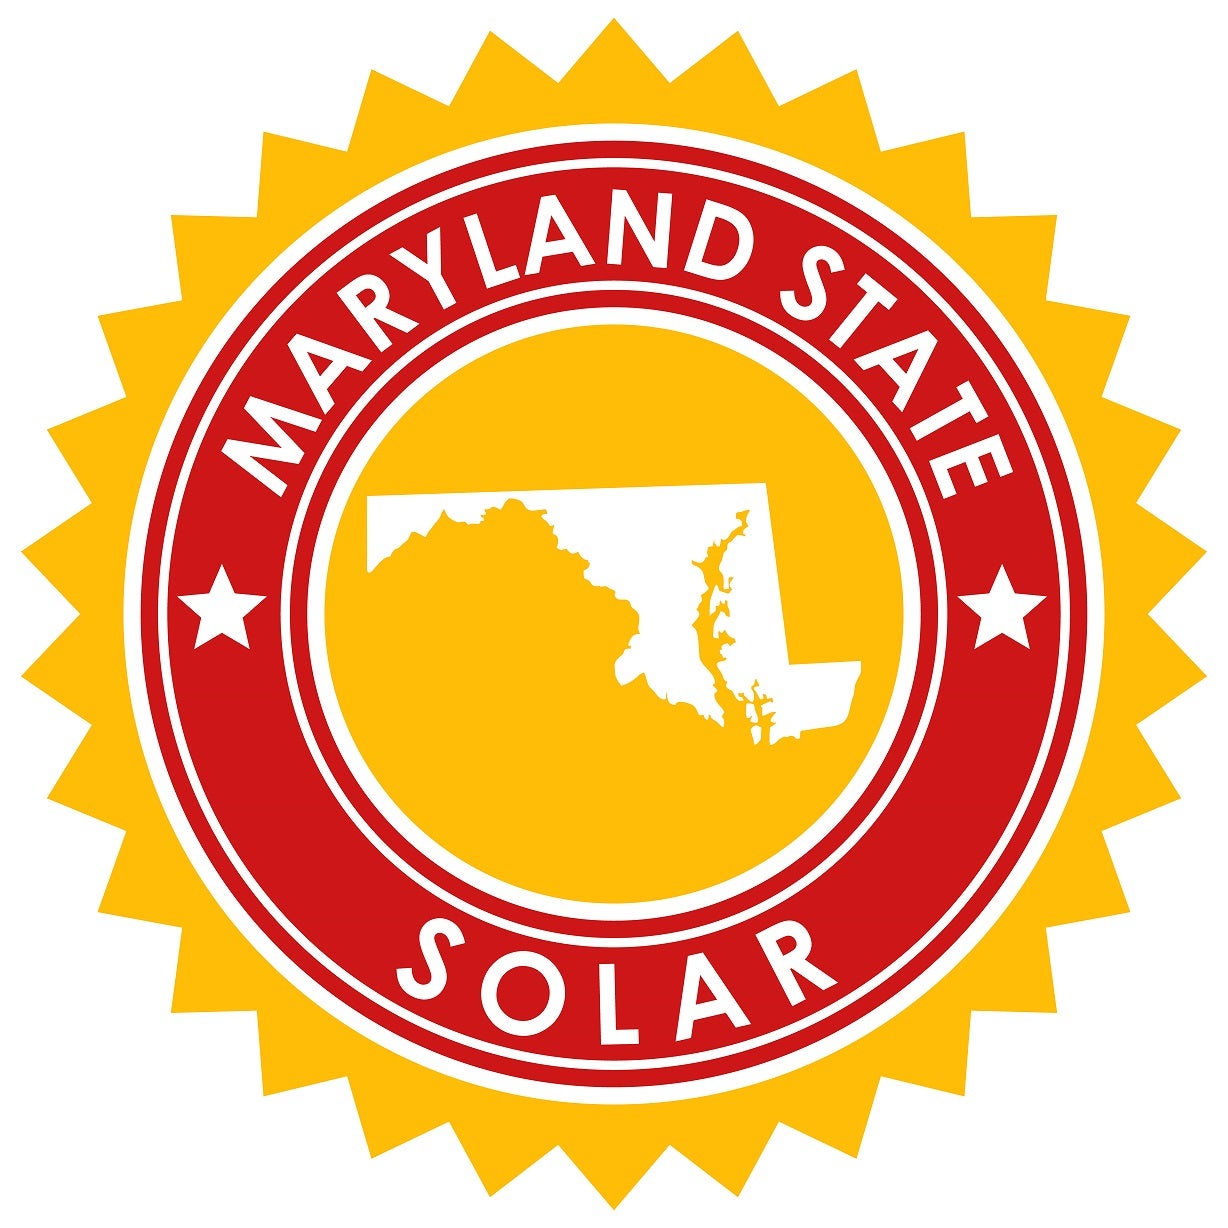 Maryland State Solar logo